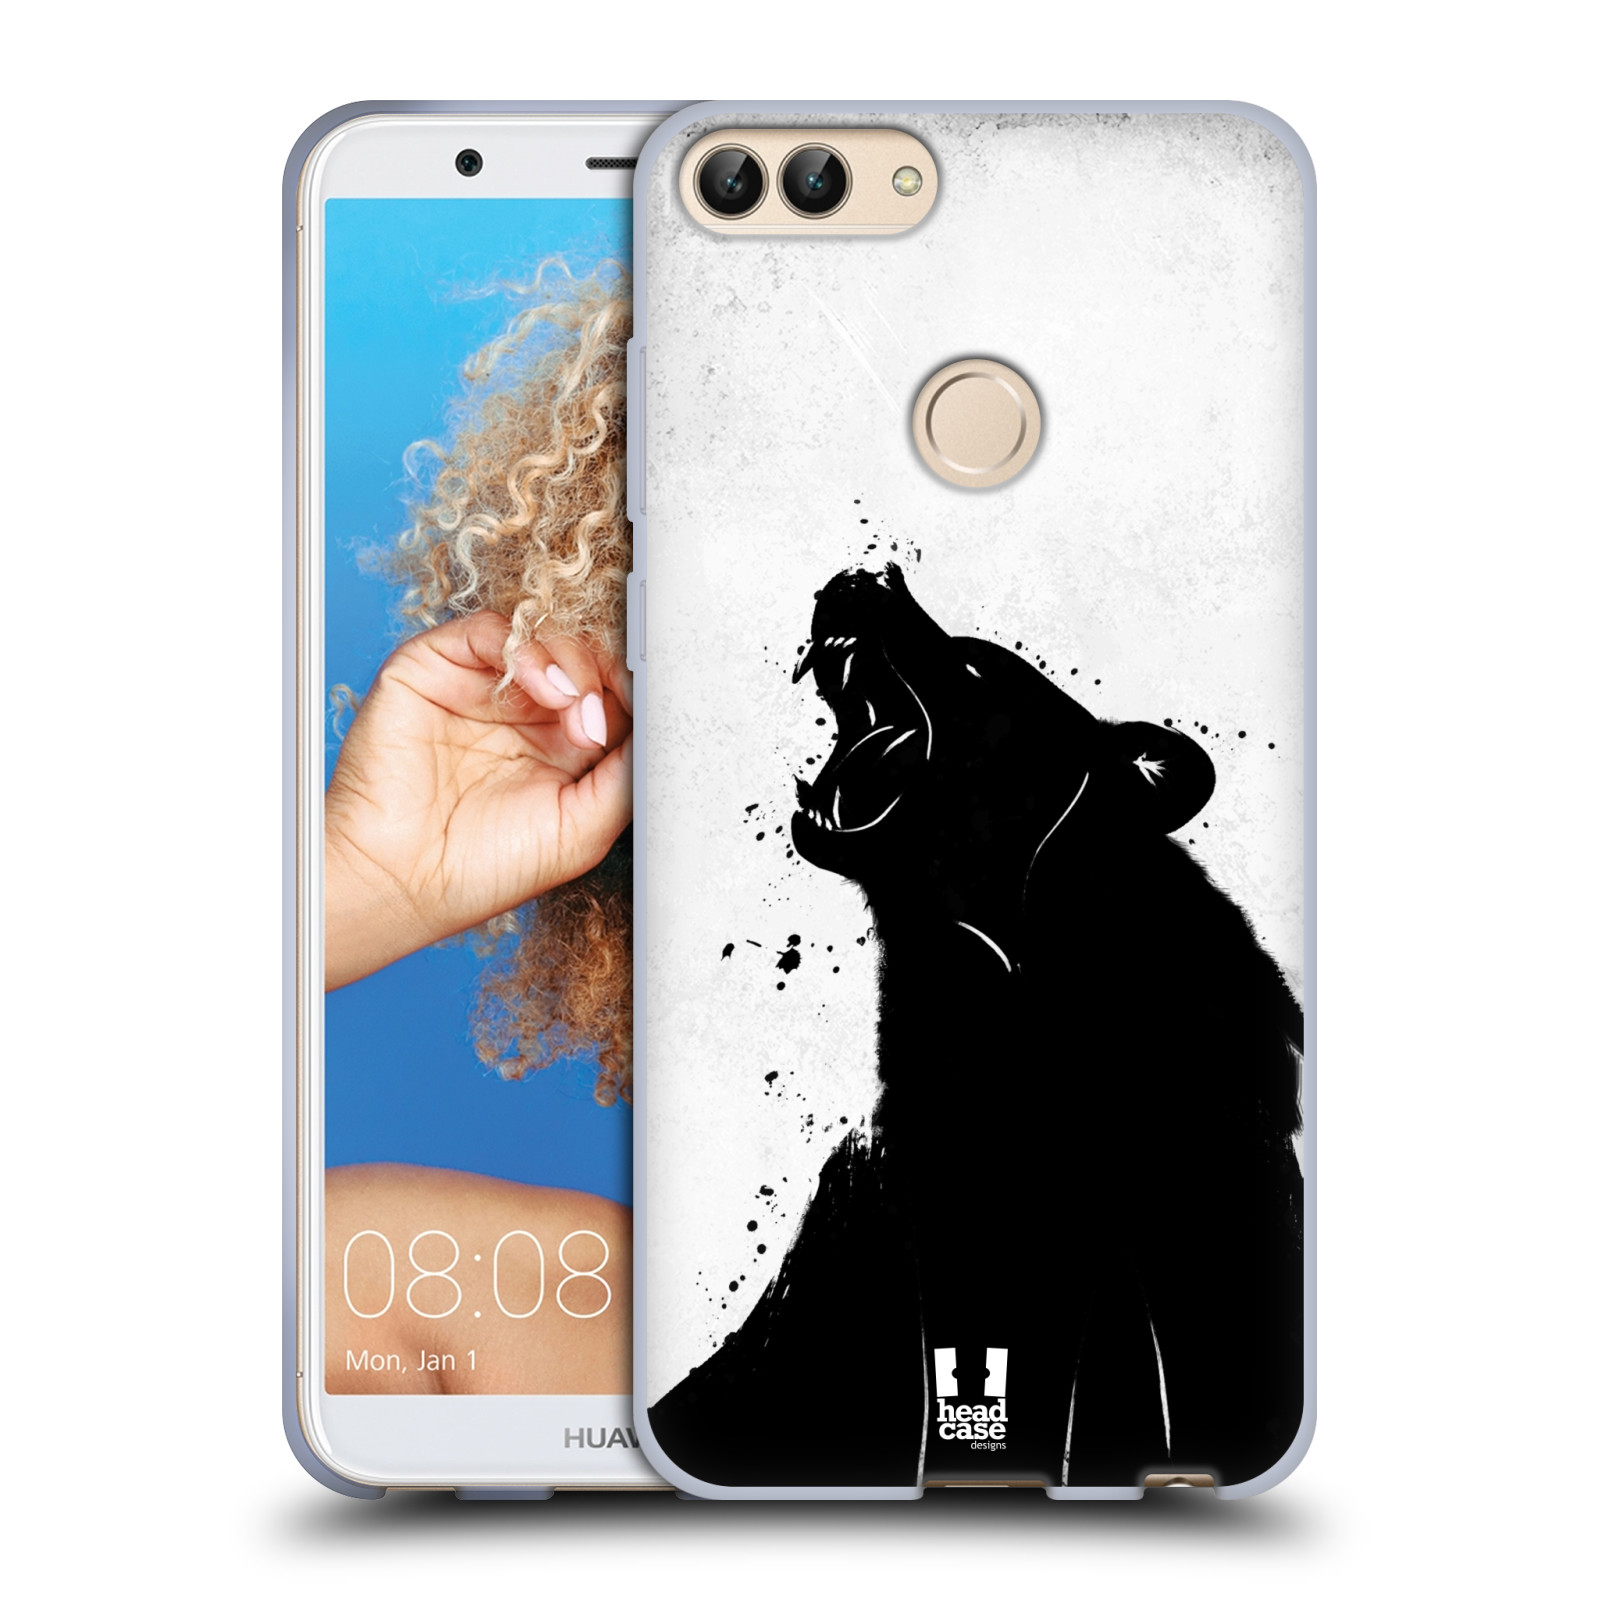 HEAD CASE silikon obal na mobil Huawei P SMART vzor Kresba tuš zvíře medvěd